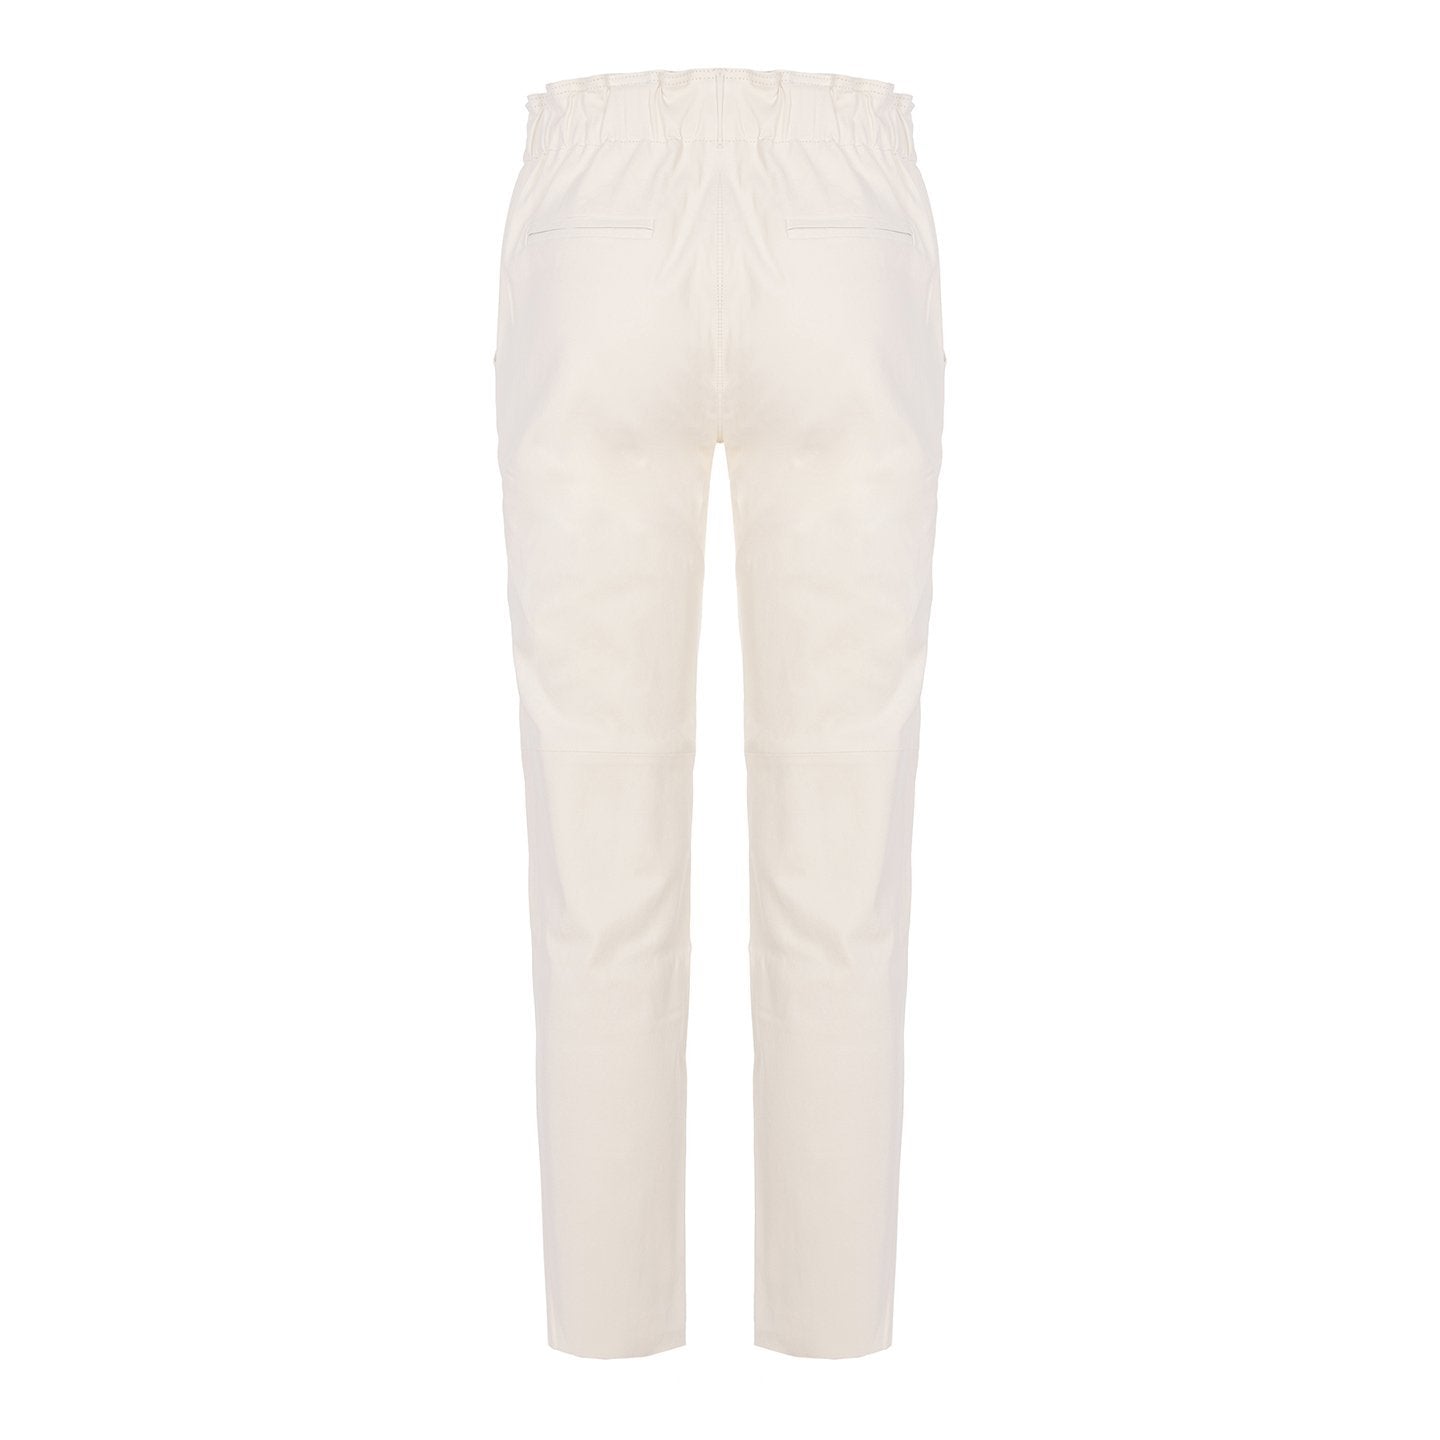 Designer white leather pants by Mon&Pau